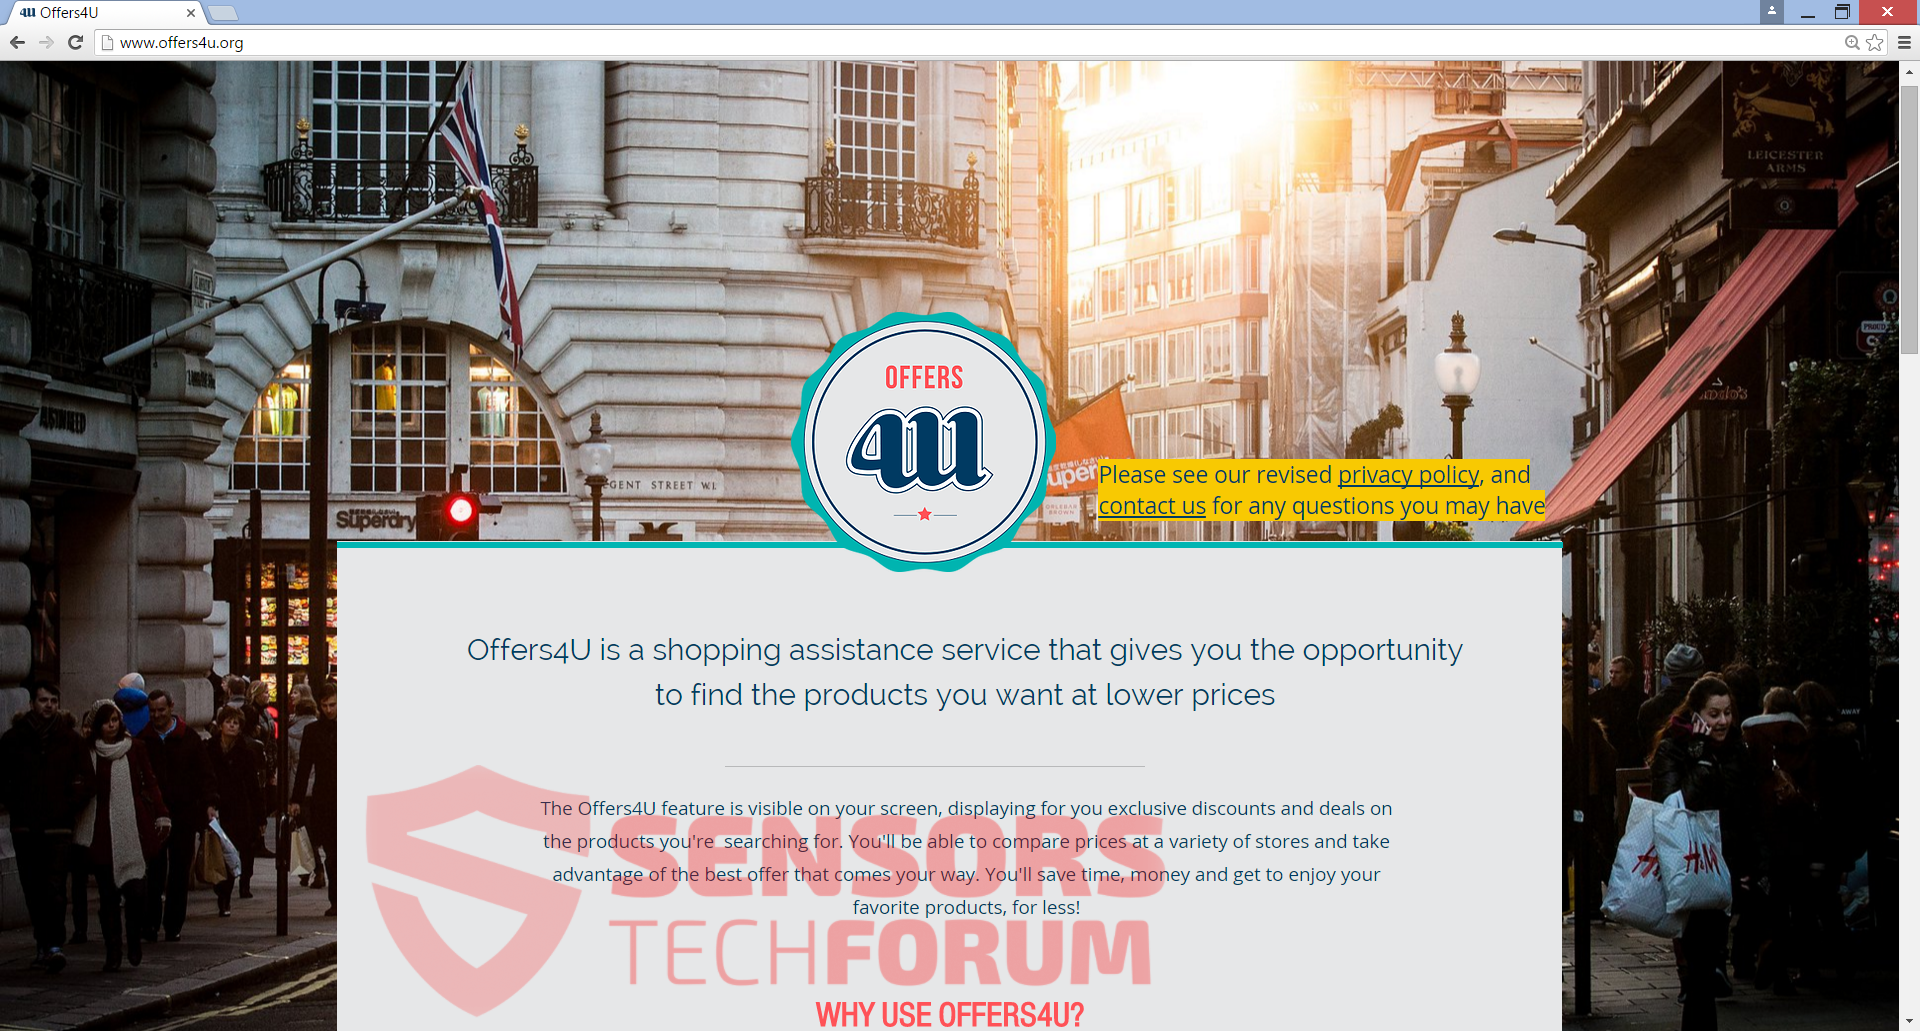 SensorsTechForum-offers4u-offers-4u-official-site-main-page